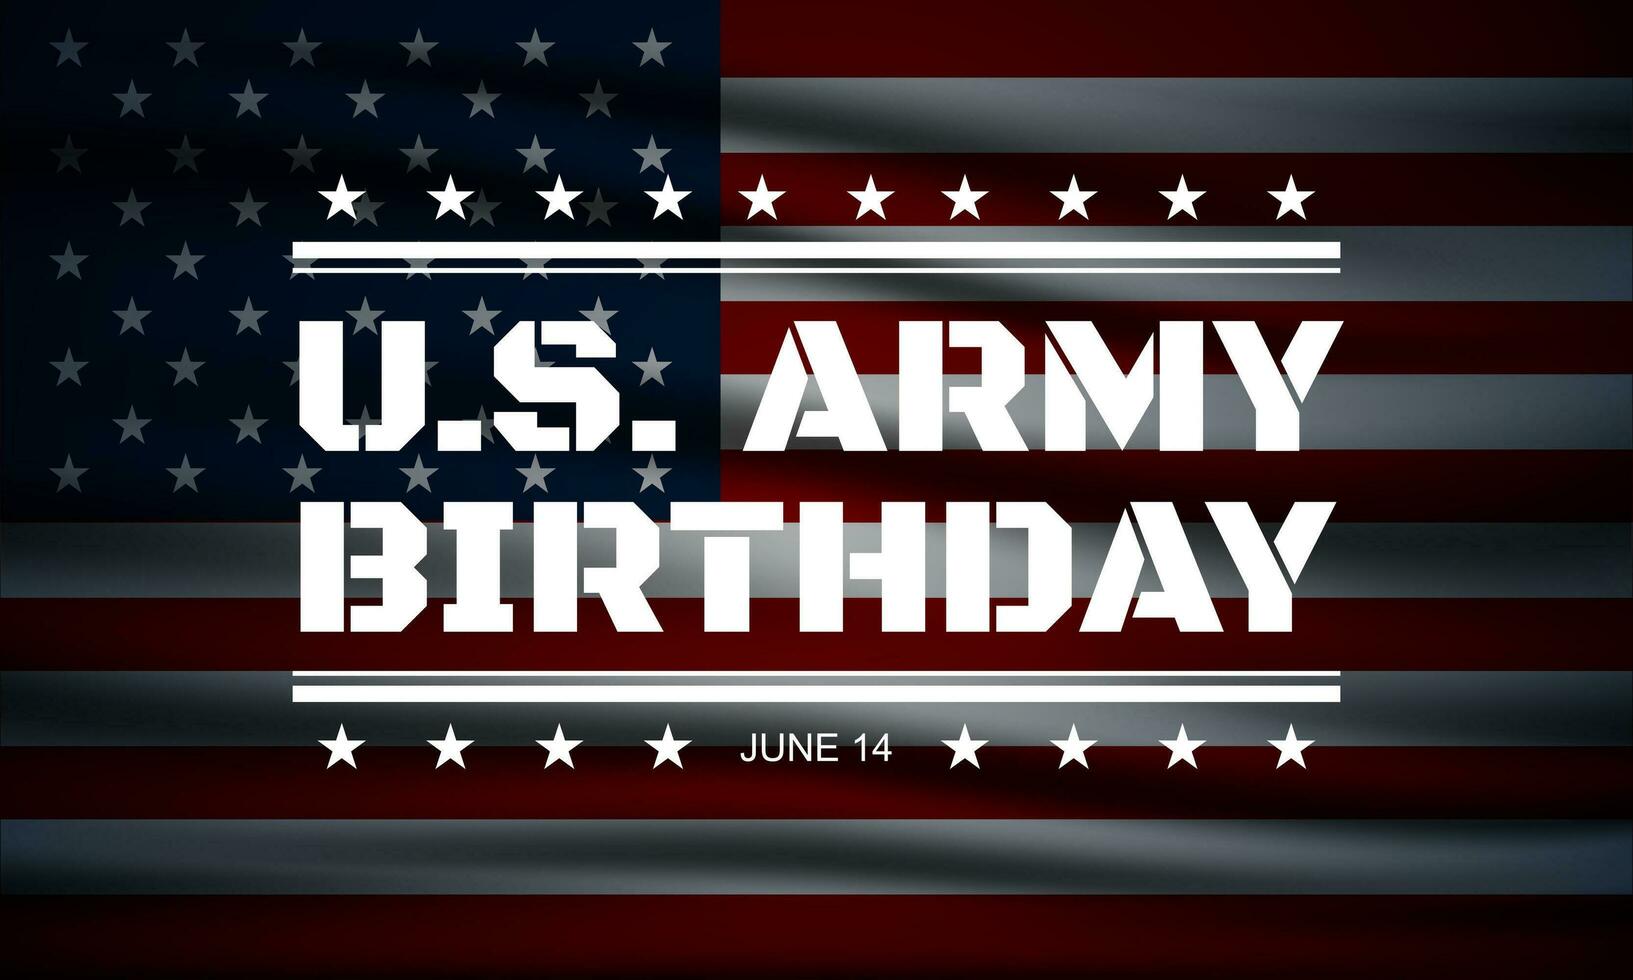 U.S. Army Birthday June 14 Background Vector Illustration